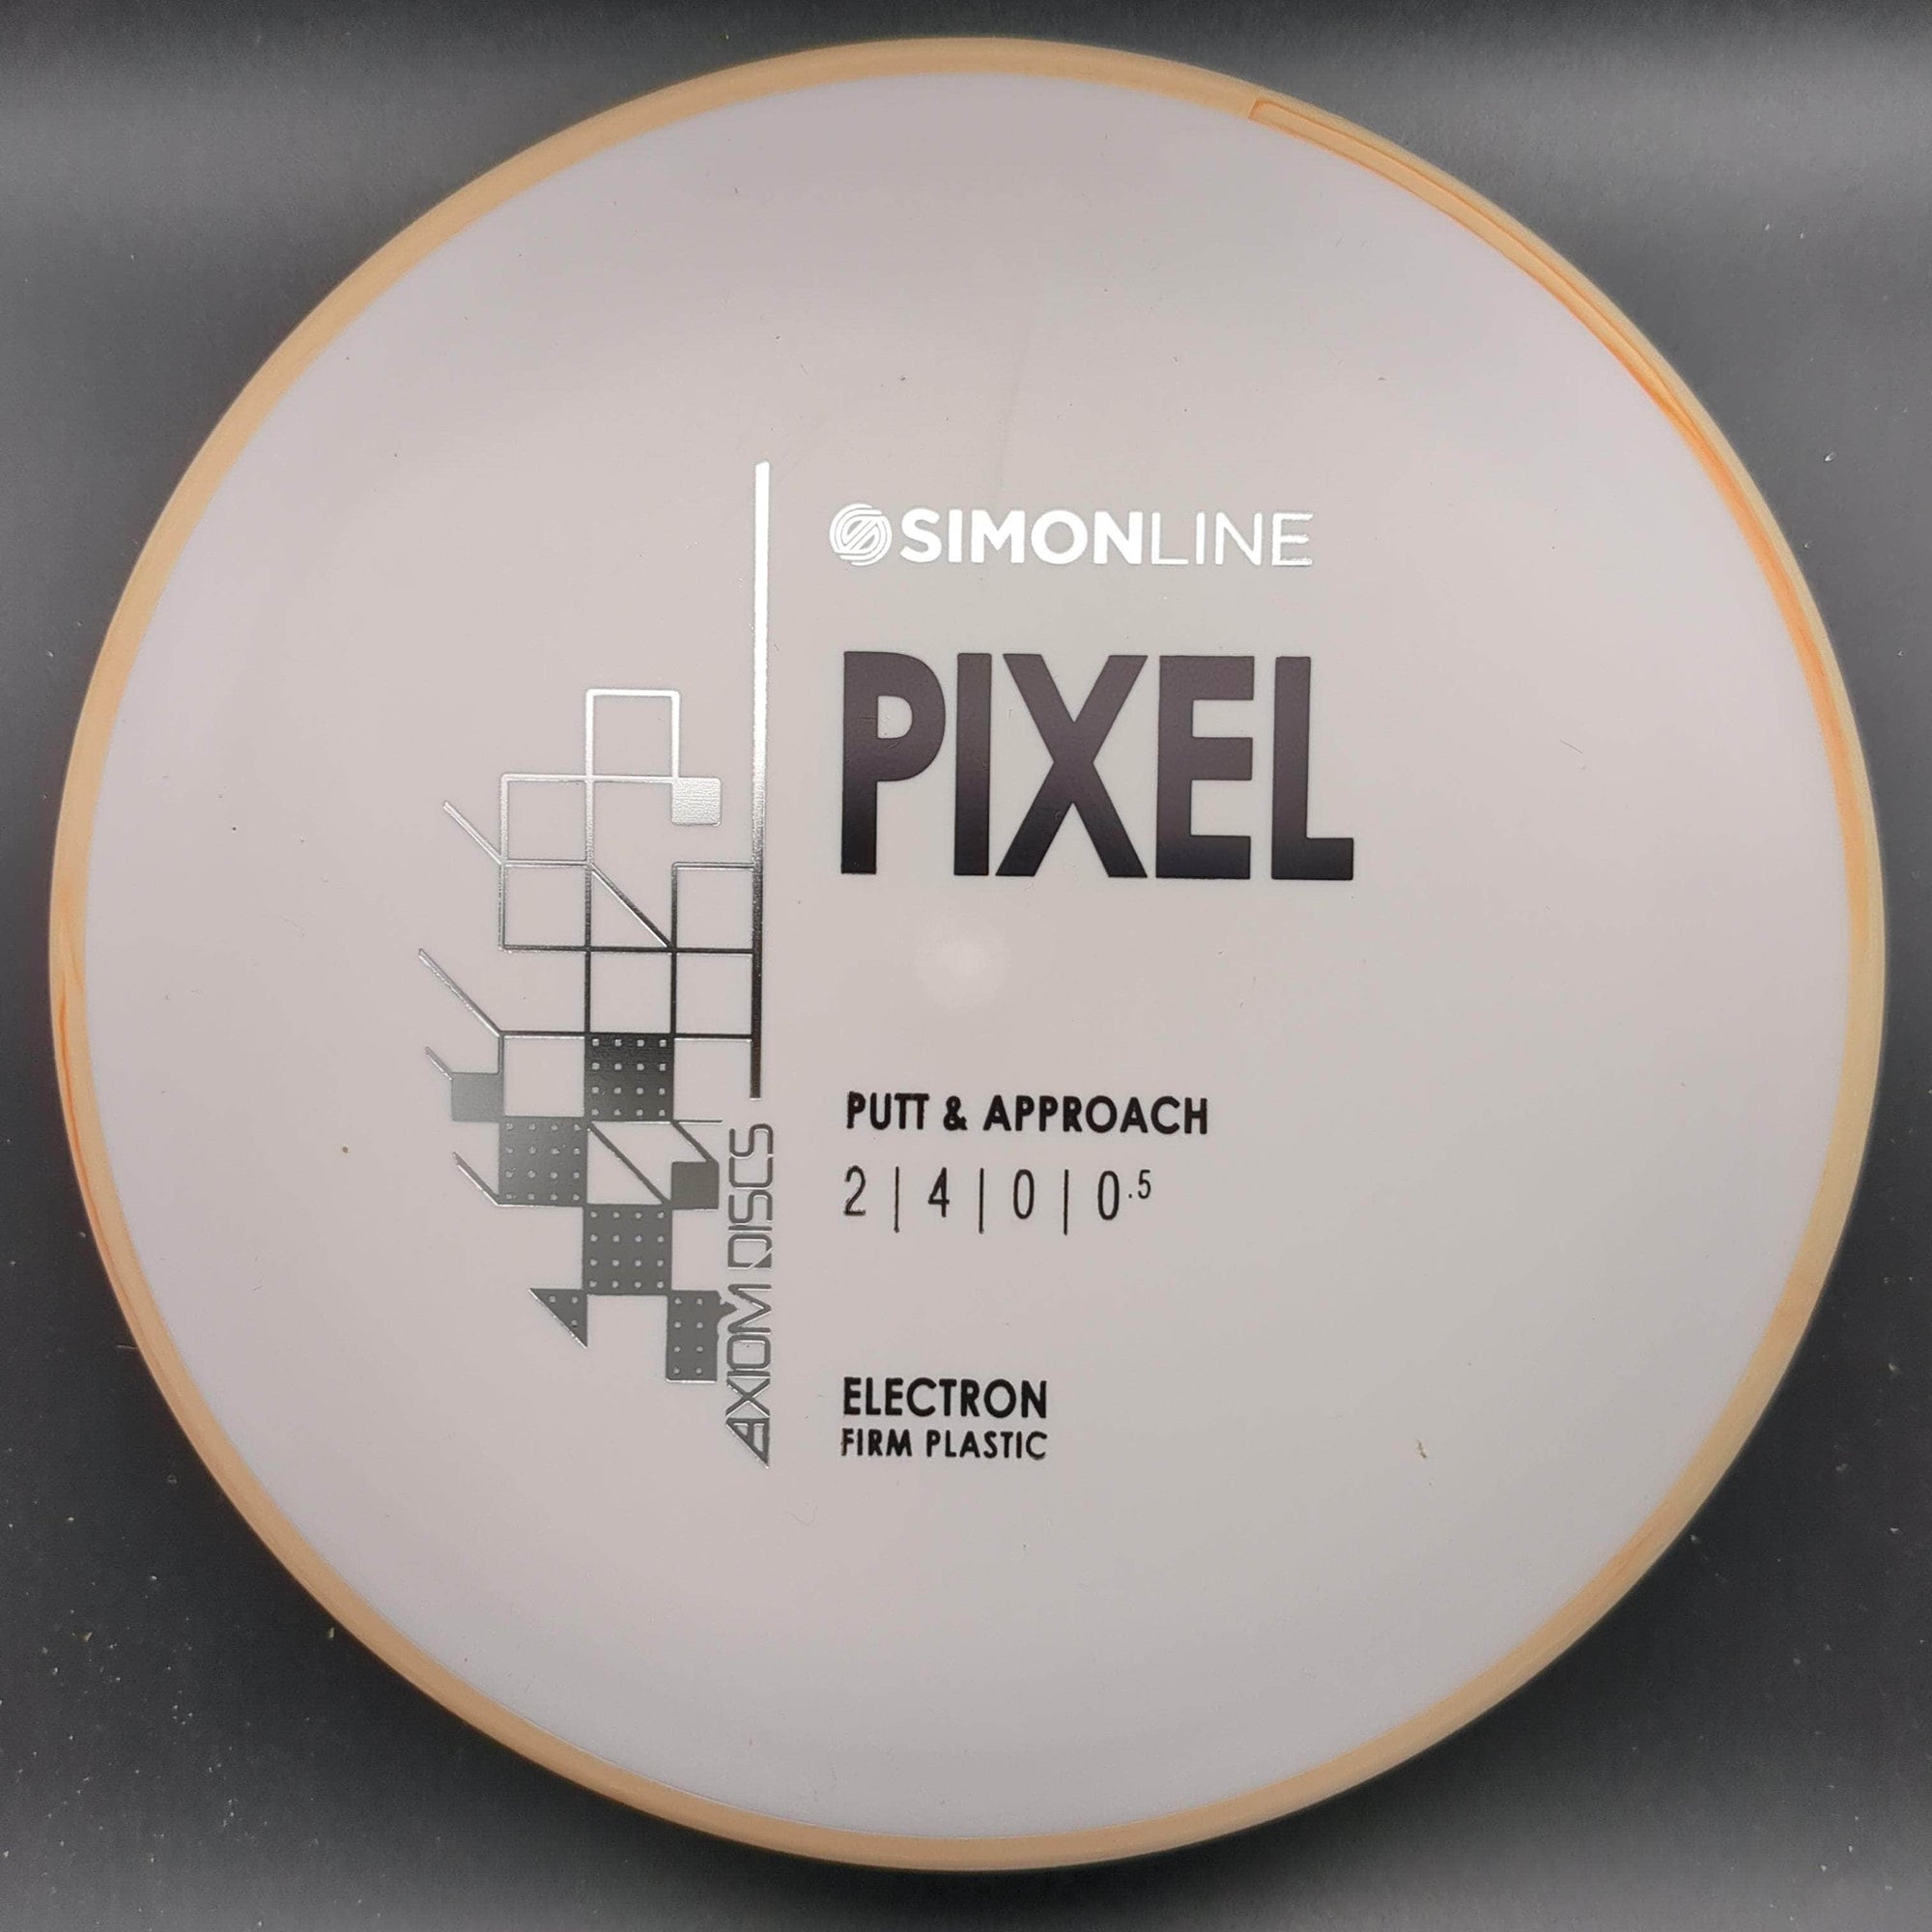 Axiom Putter Orange Rim White Plate 175g Pixel, Electron Firm, Simon Line